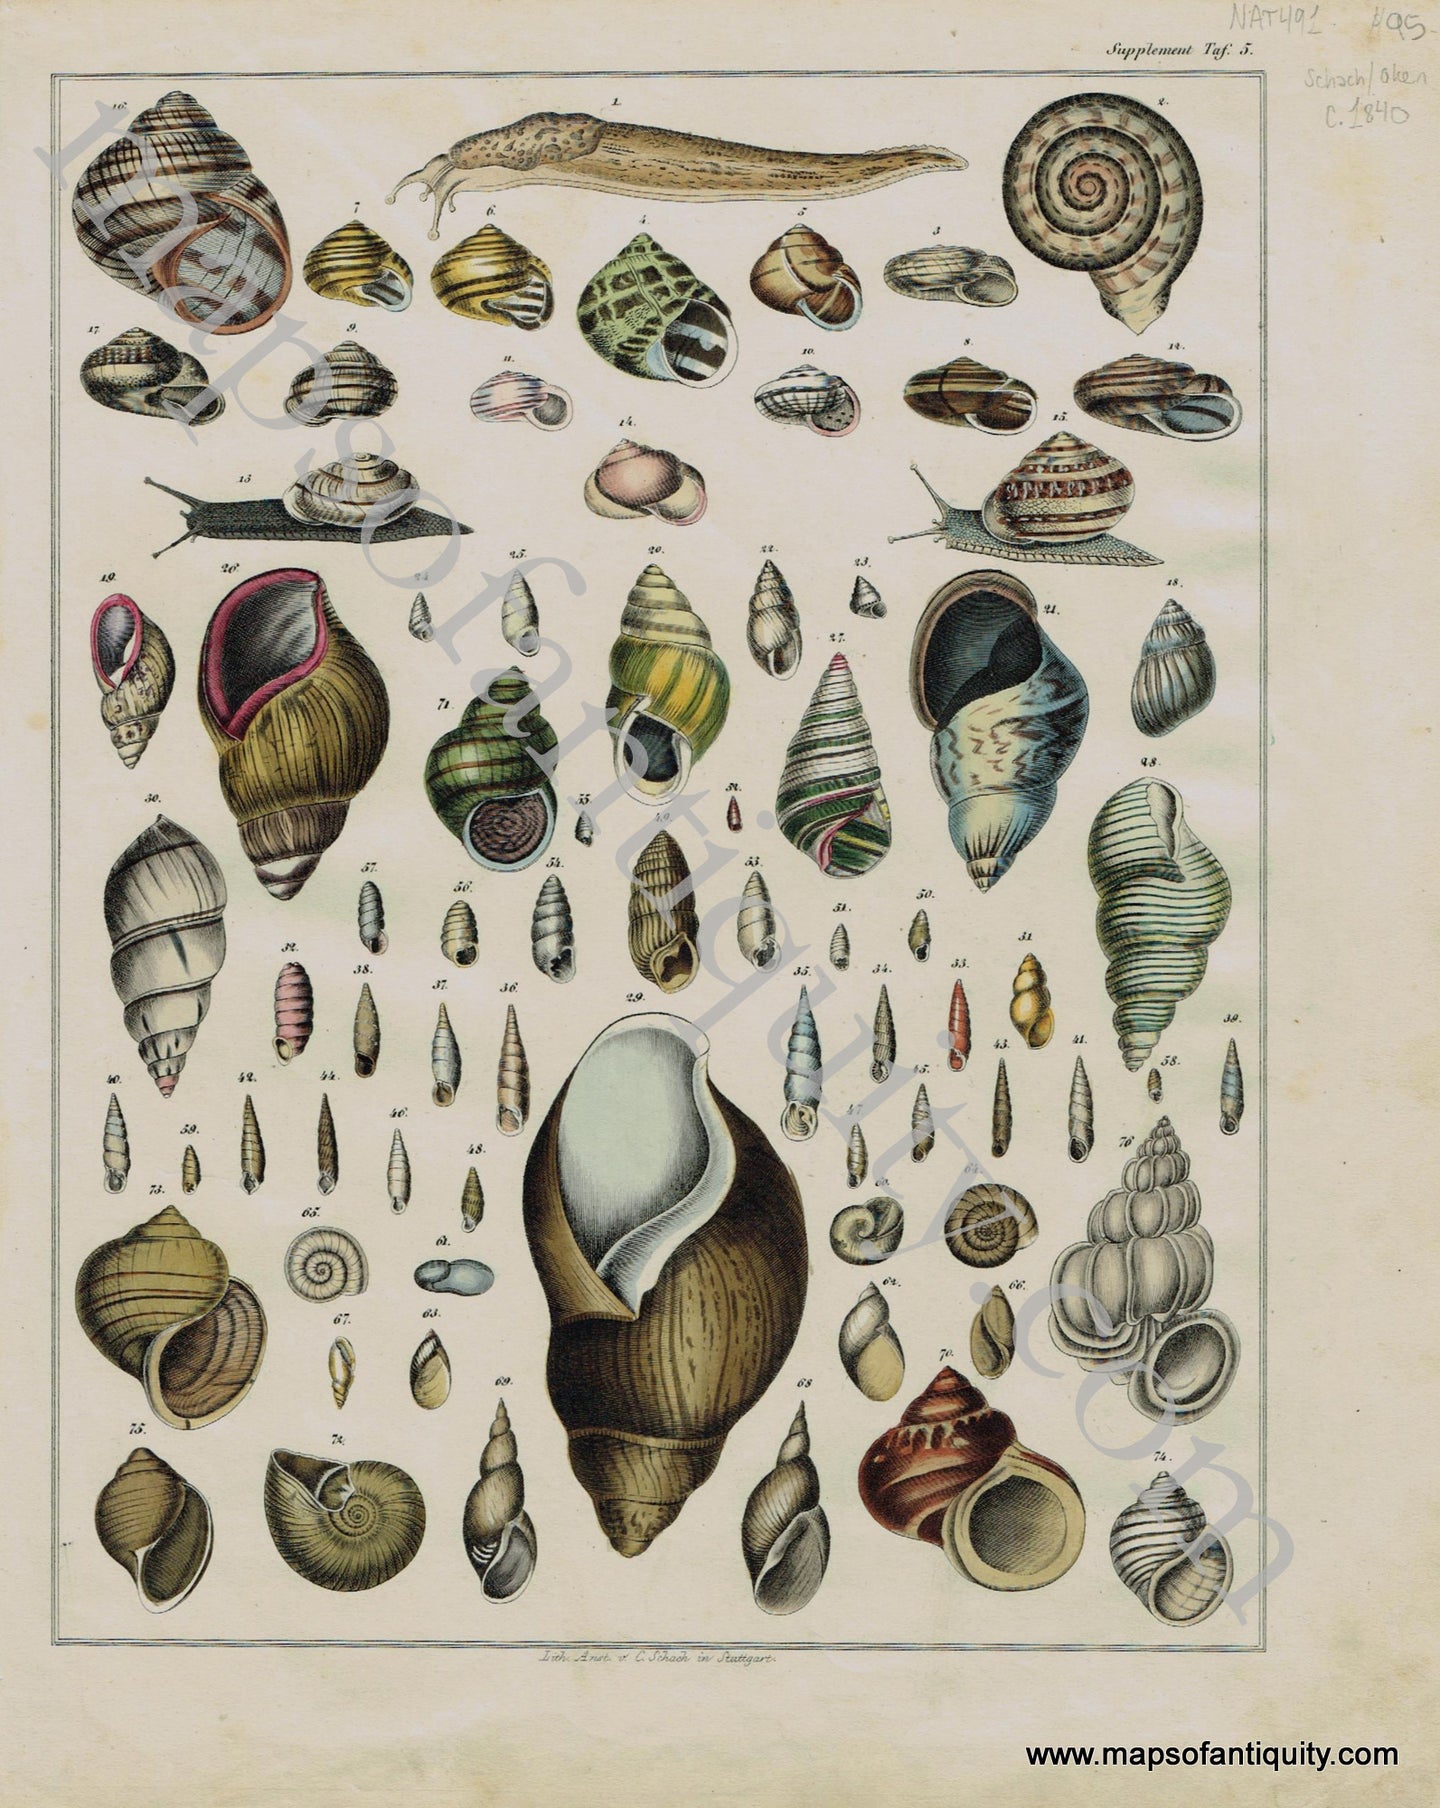 Antique-Print-Prints-Engraved-Engravings-Illustration-Illustrated-Shell-Seashells-Seashell-Sea-Shells-Snail-Snails-Slug-Slugs-Natural-History-Schnapper-Oken-Oken-Schach-1840s-1800s-Early-Mid-19th-Century-Maps-of-Antiquity